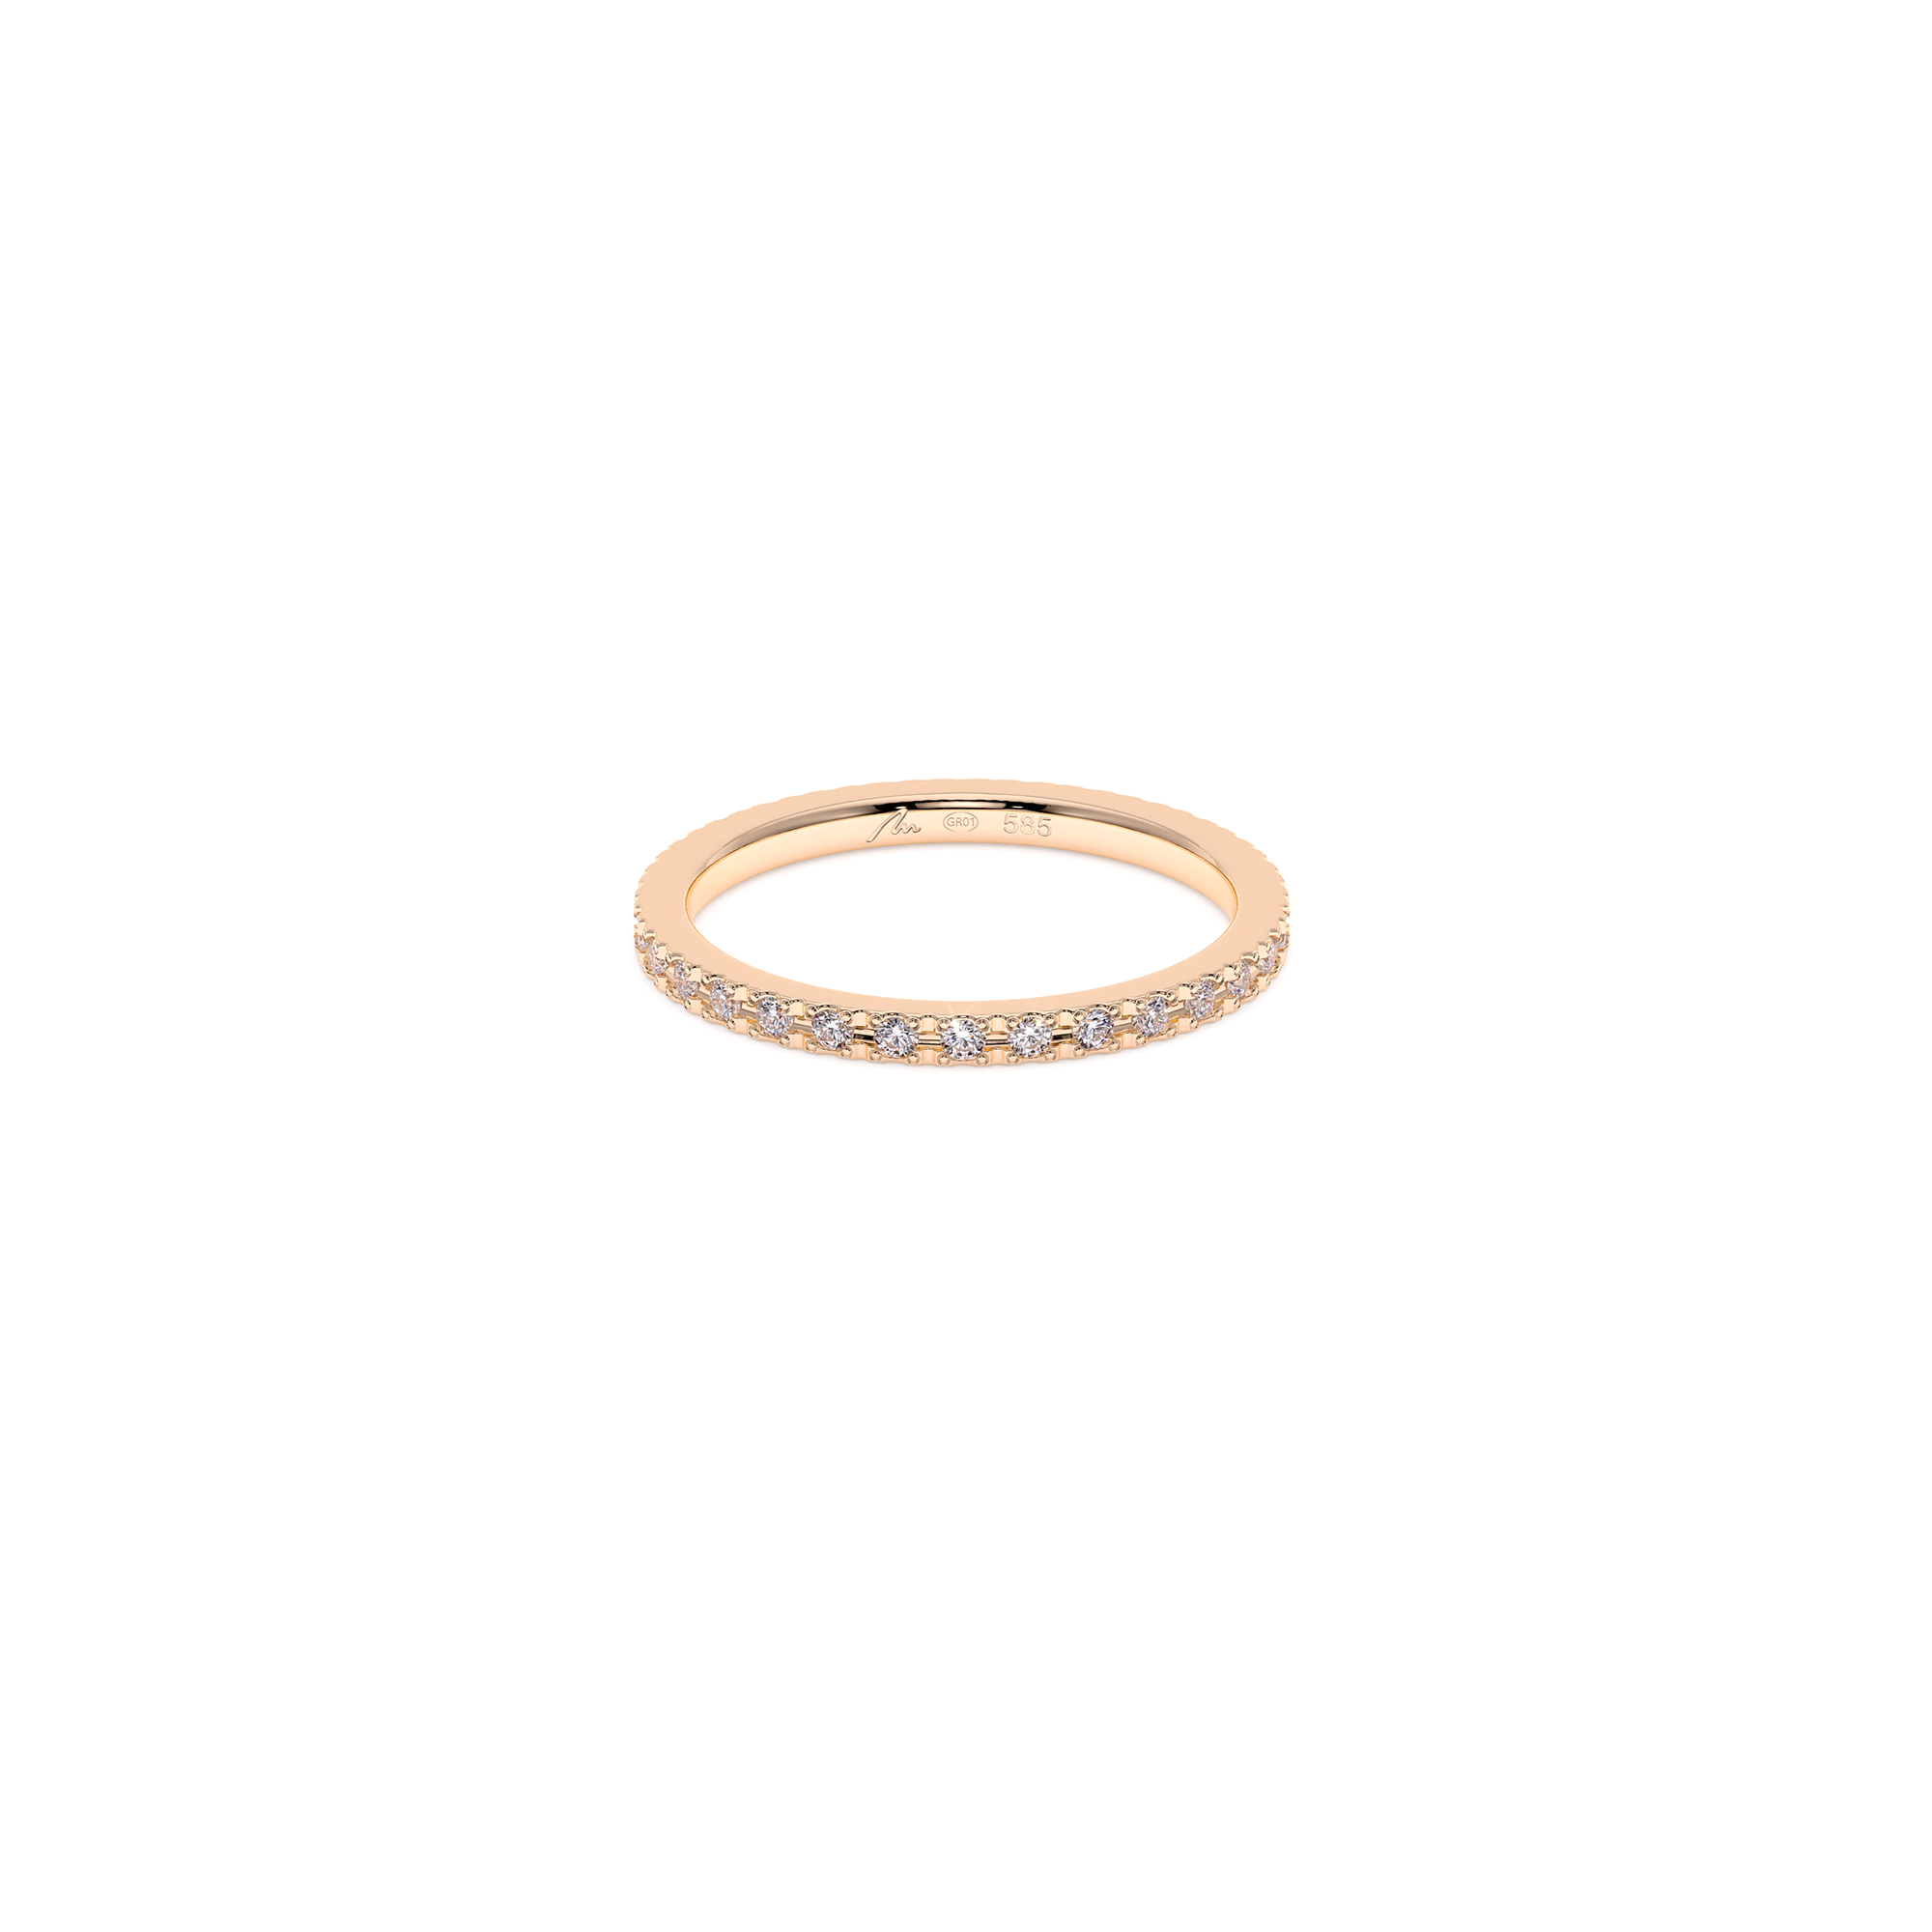 14 k rose gold Tennis ring with 0.15 CT white diamonds